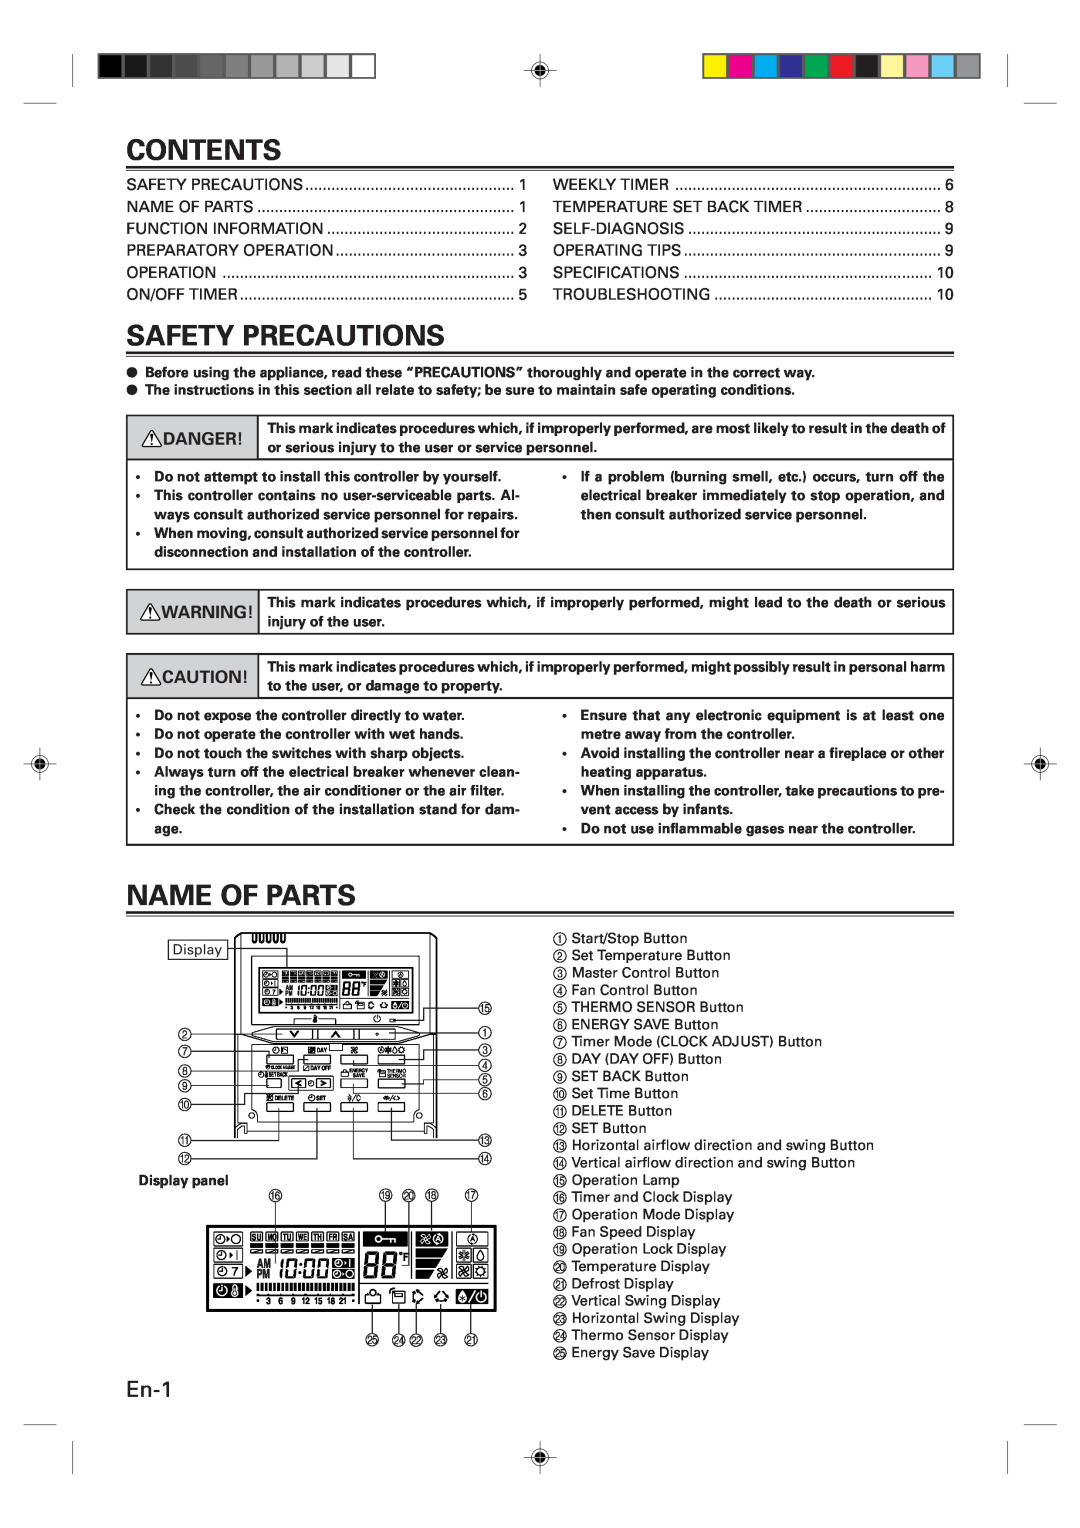 Fujitsu UTB-UUB, Remote Controller manual Contents, Safety Precautions, Name Of Parts, En-1, Danger 